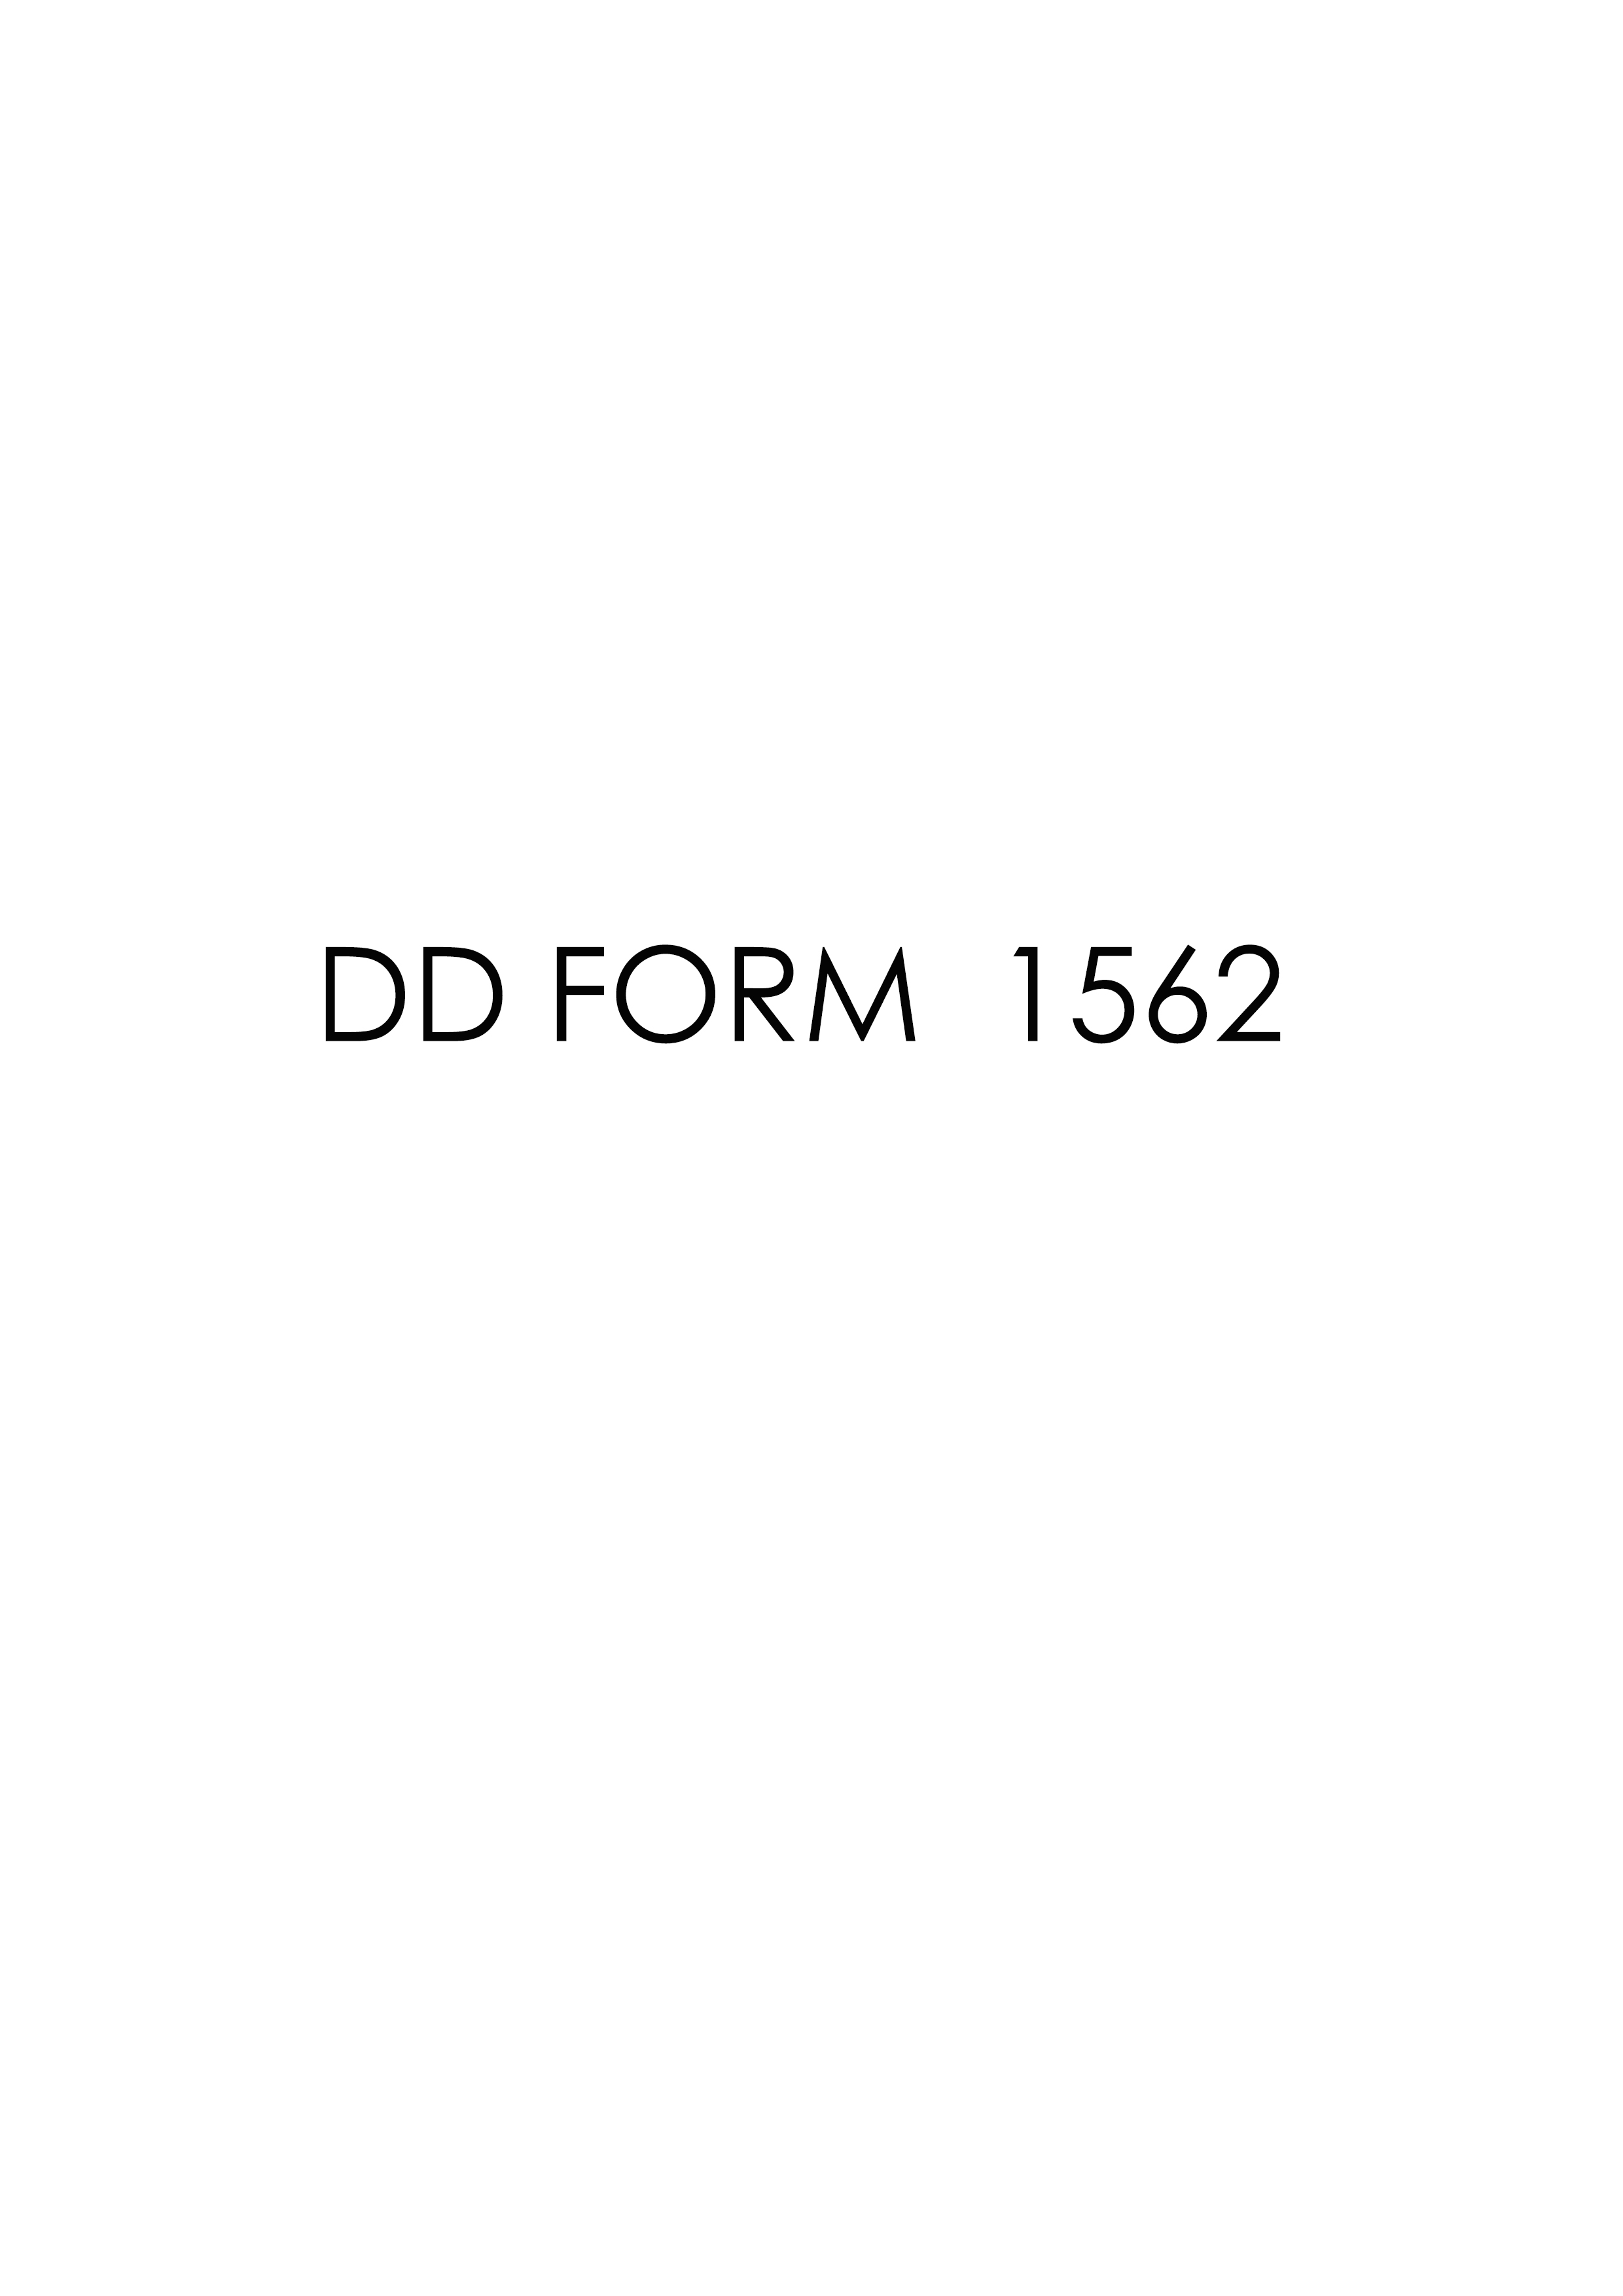 Download dd 1562 Form